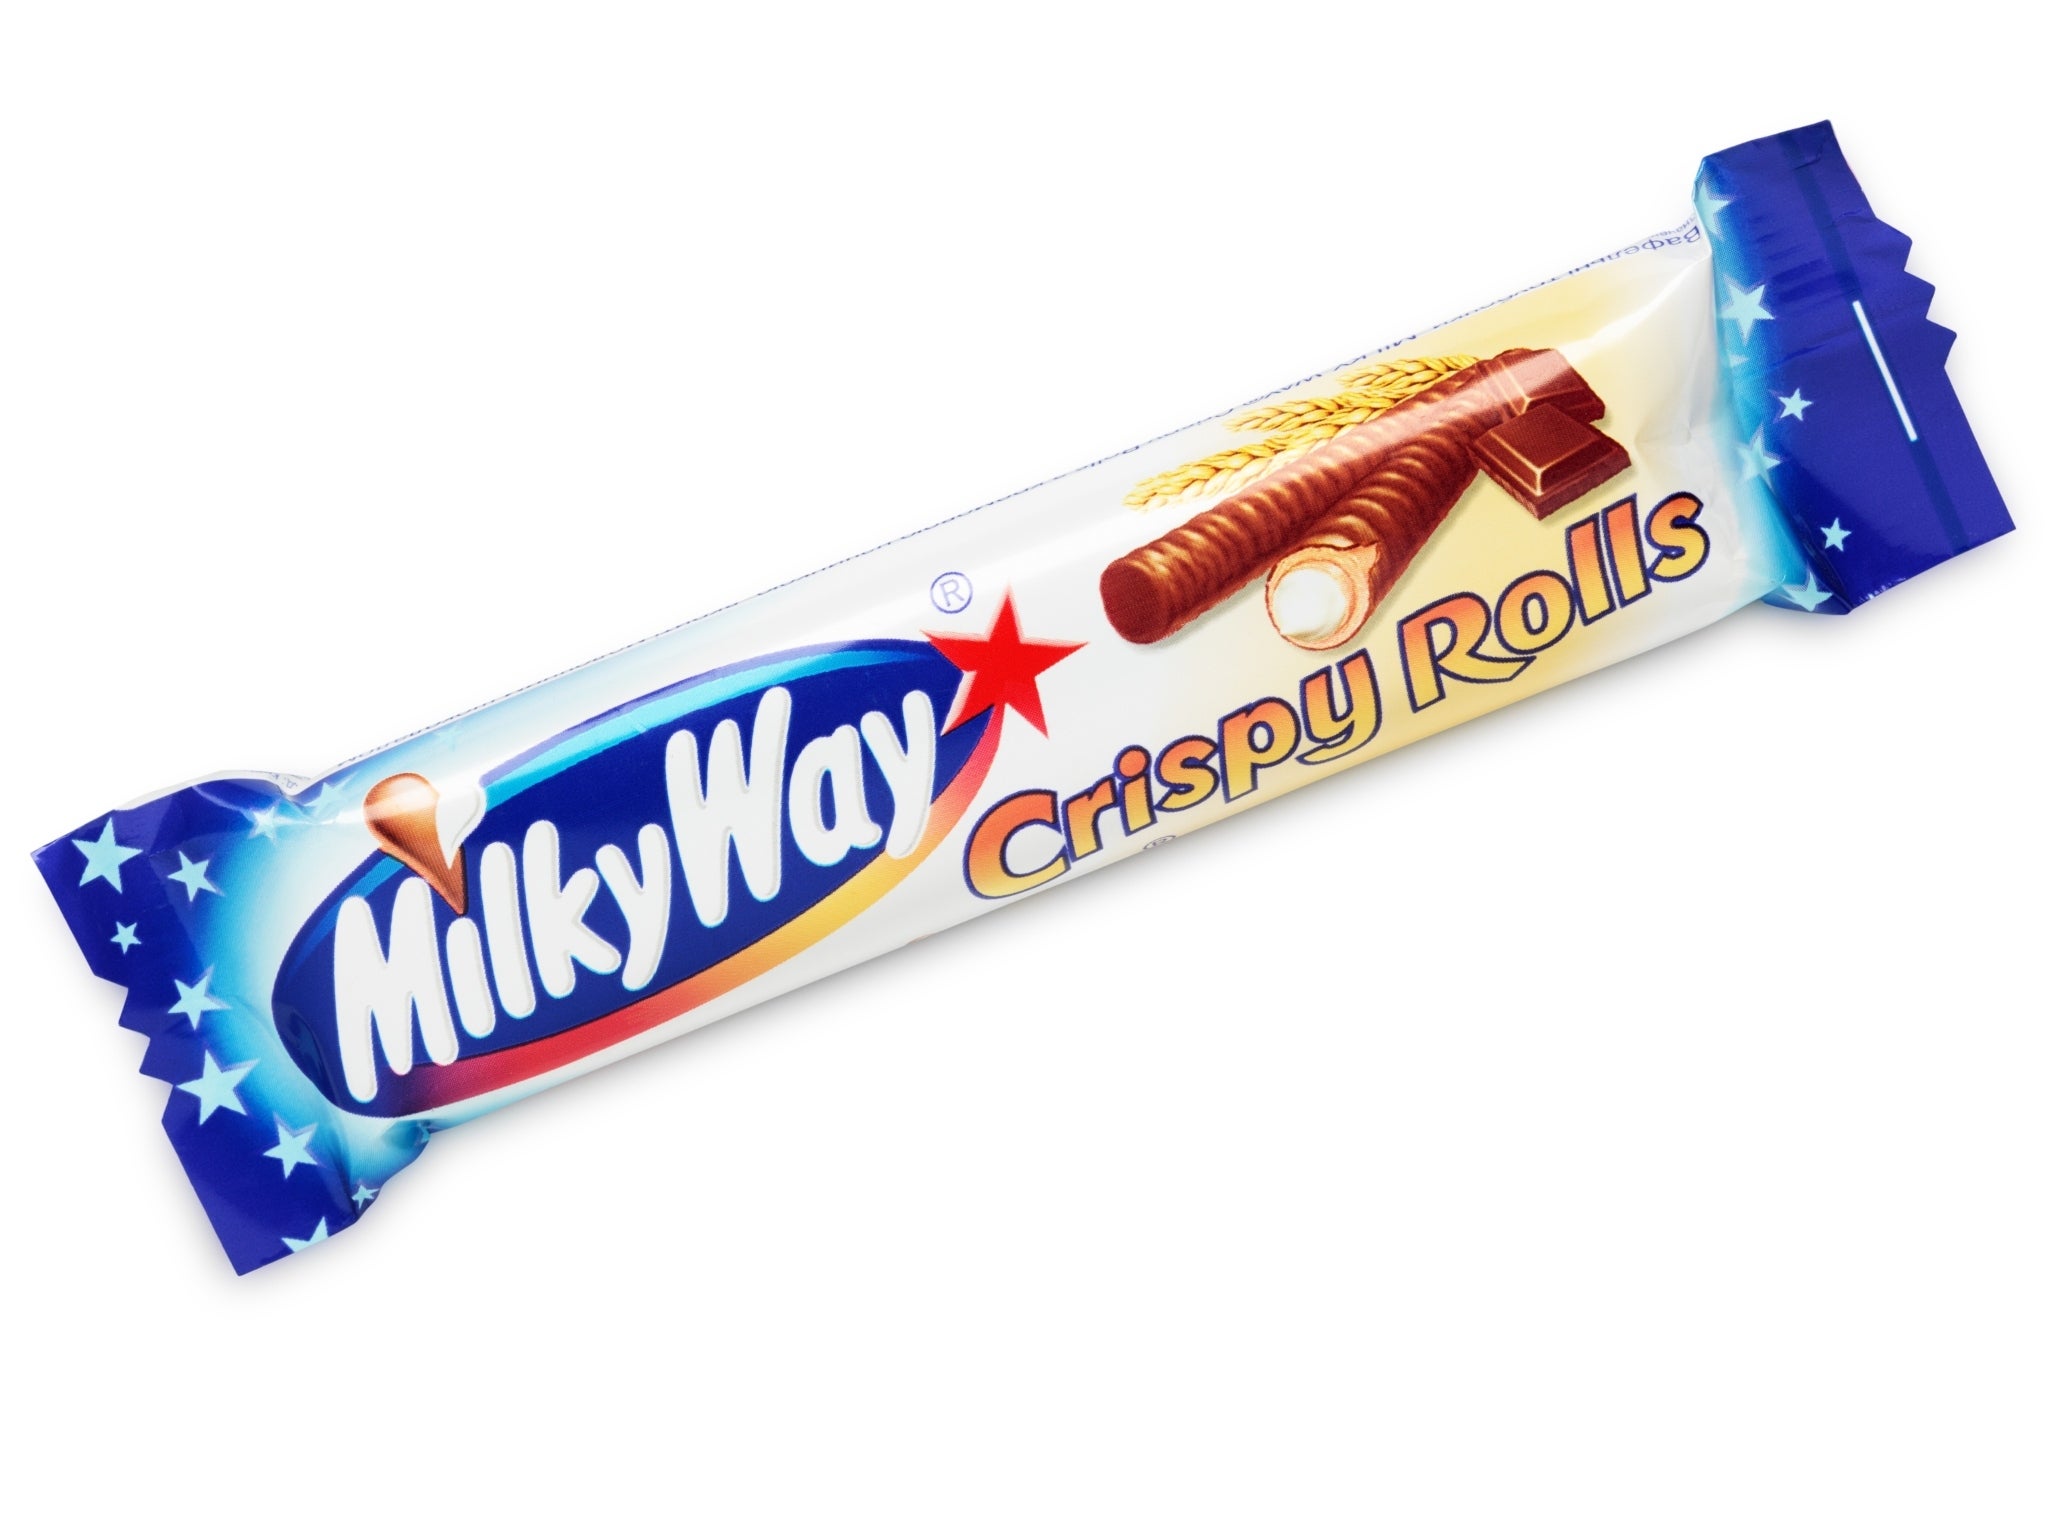 Milky Way Crispy Rolls are no longer on shop shelves